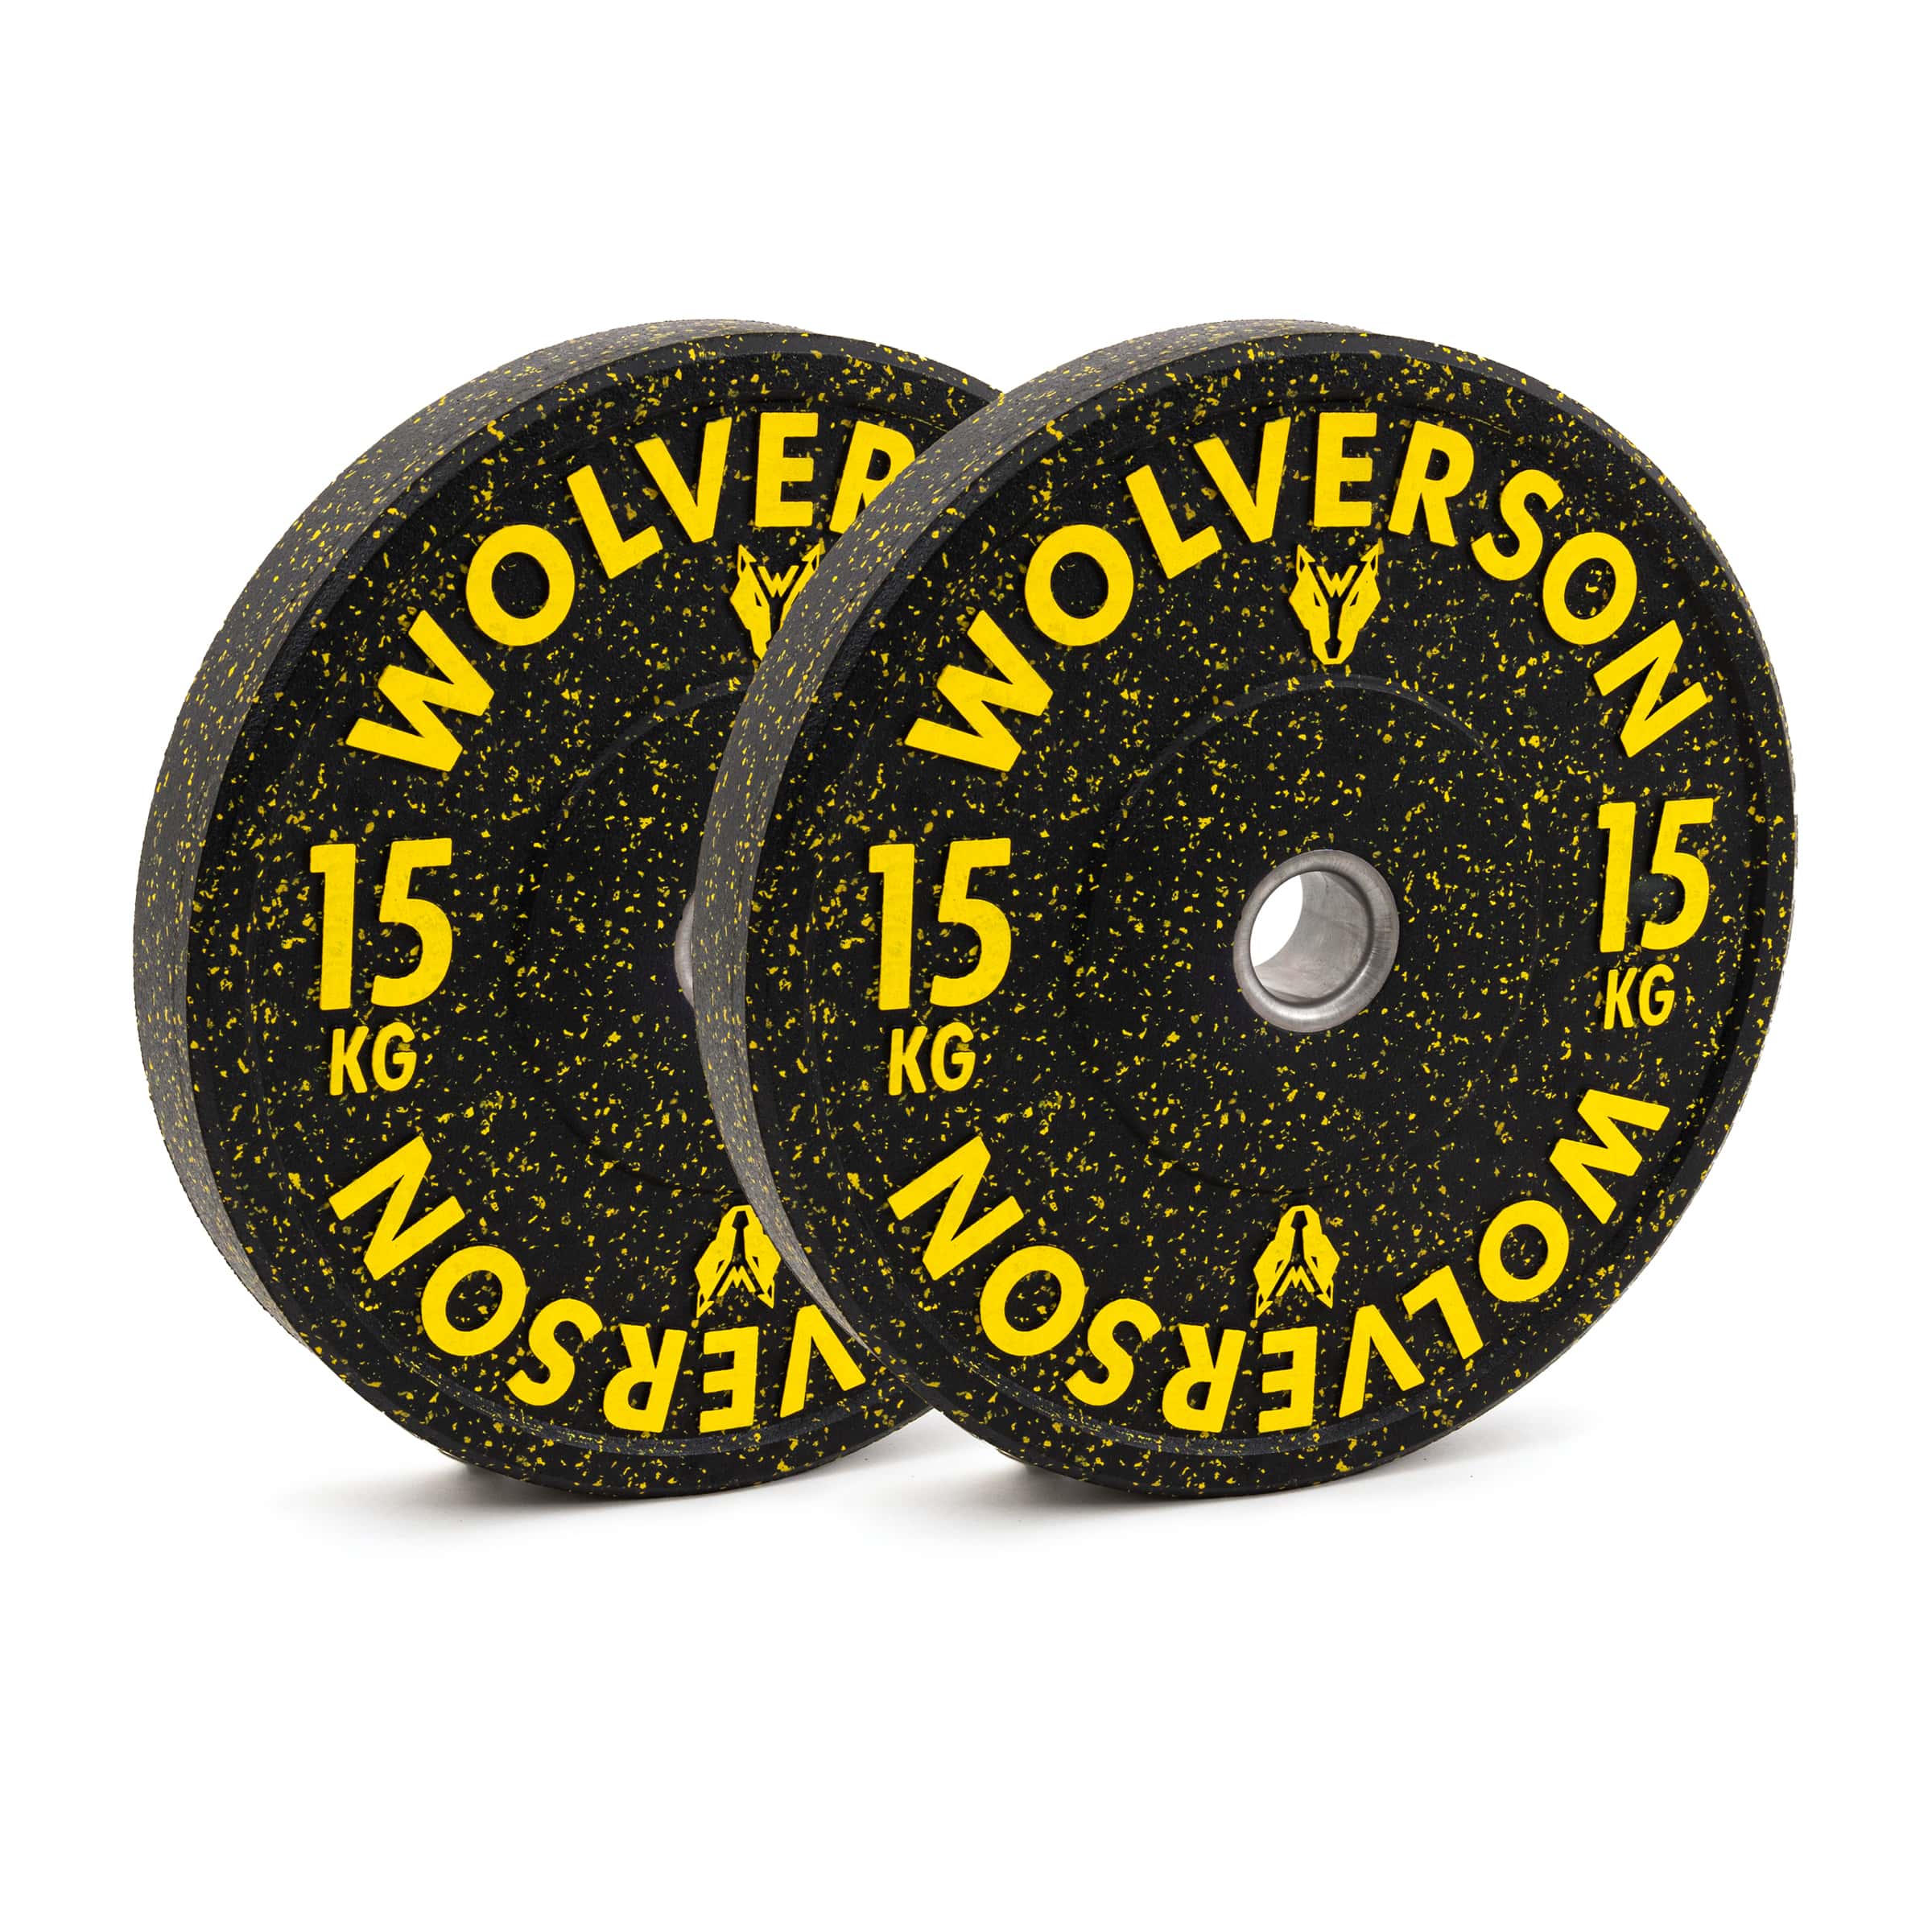 Wolverson Foundation Bumper Plates